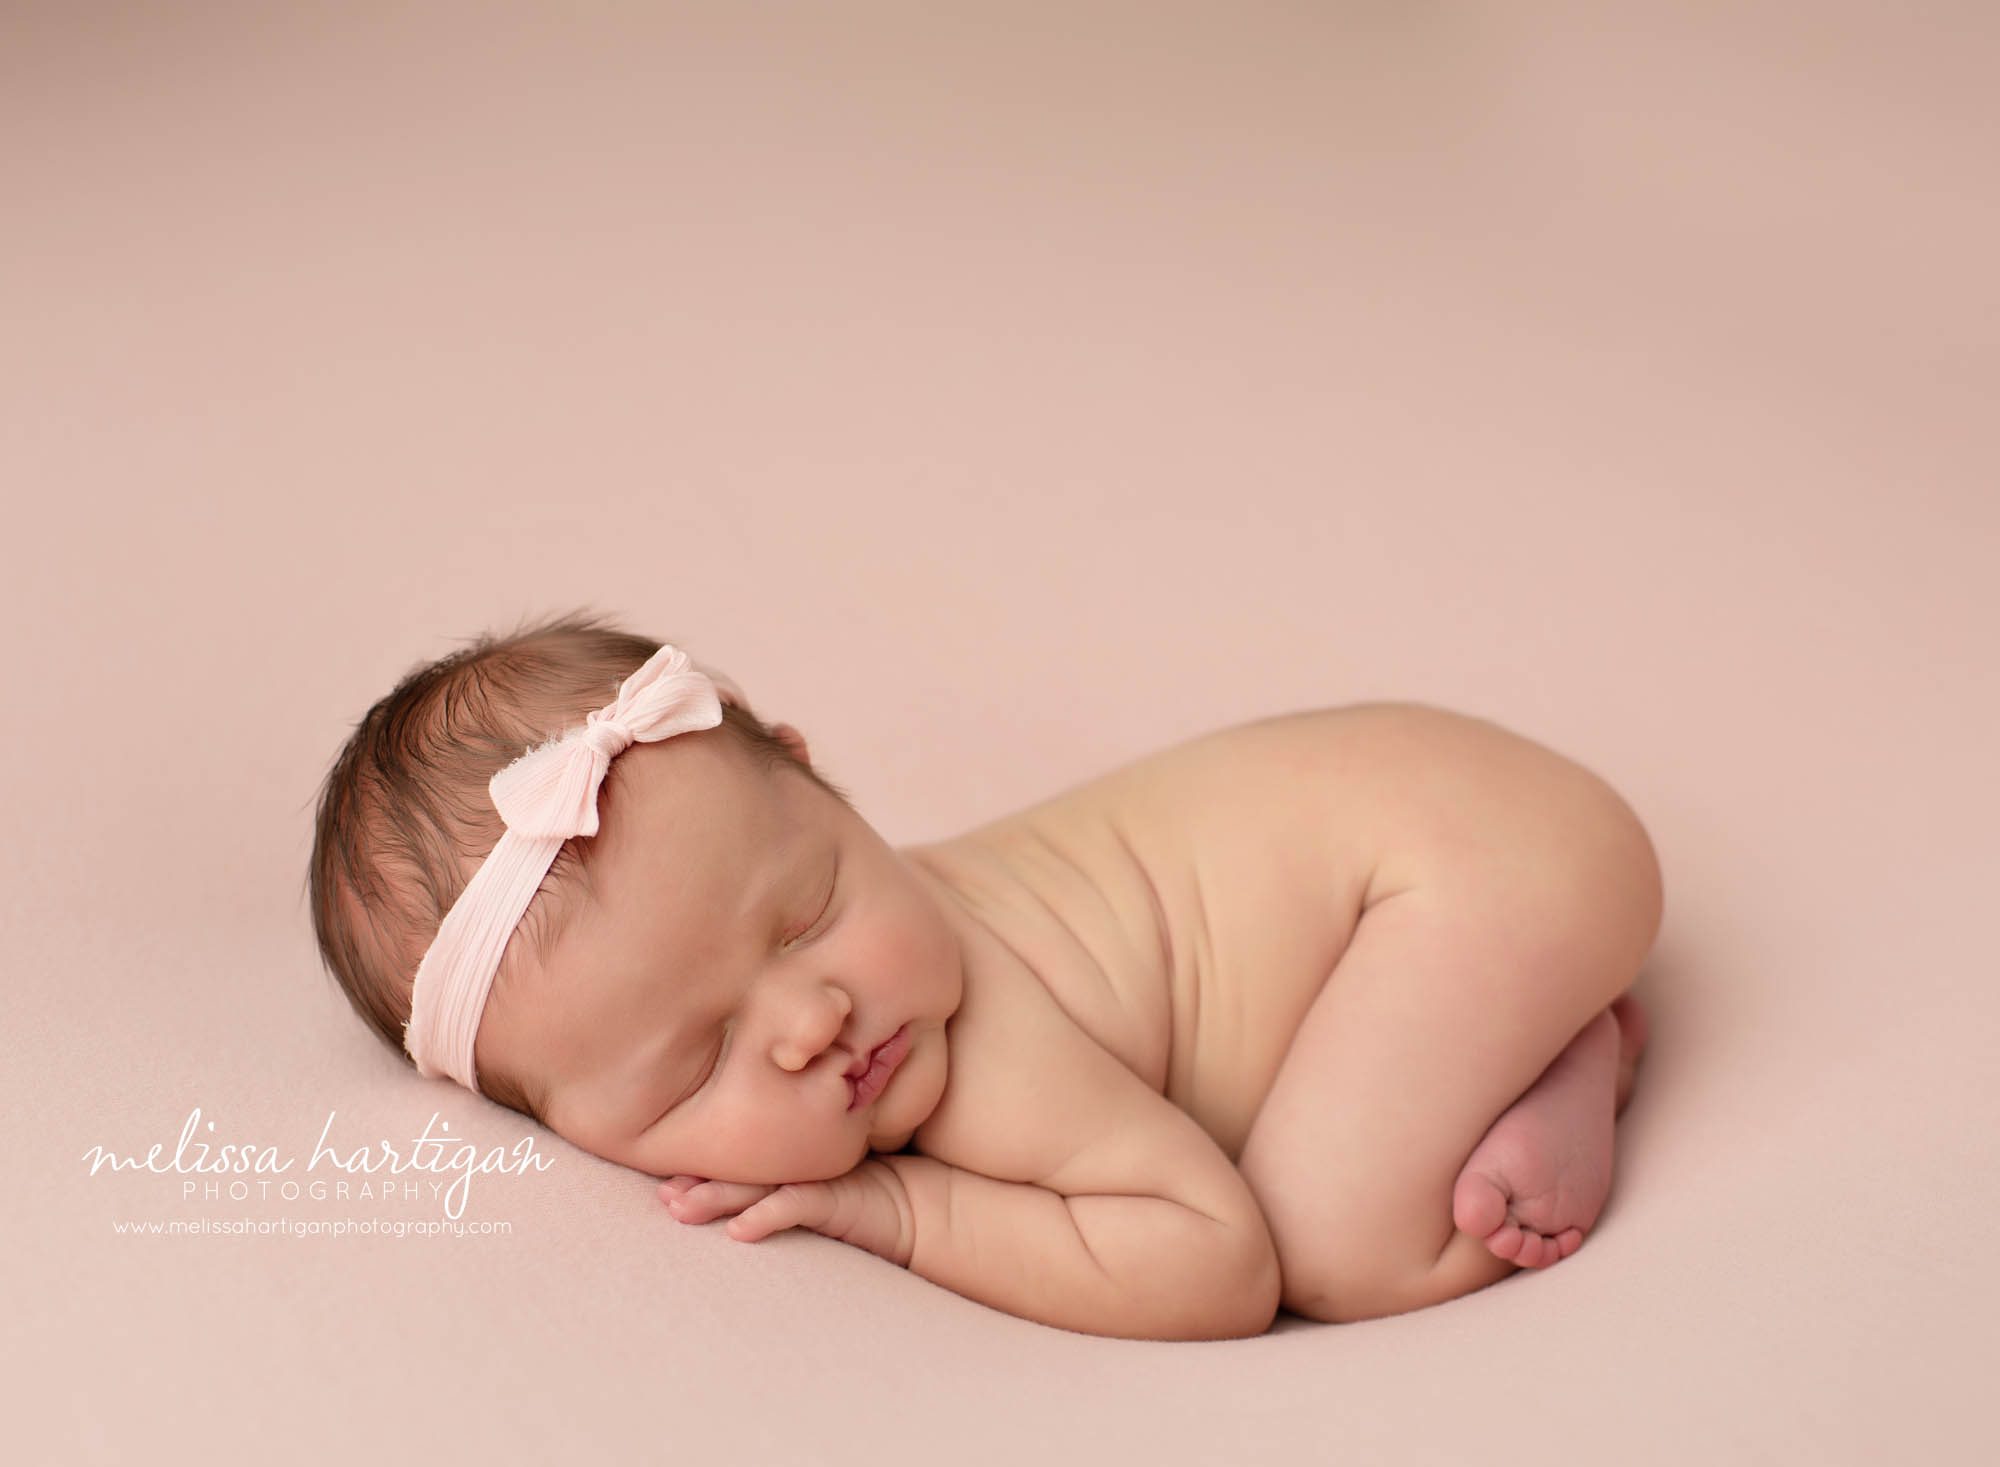 newborn baby girl posed on tummy with bum up wearing pink bow headband in studio newborn photography session Tolland CT Newborn Photography